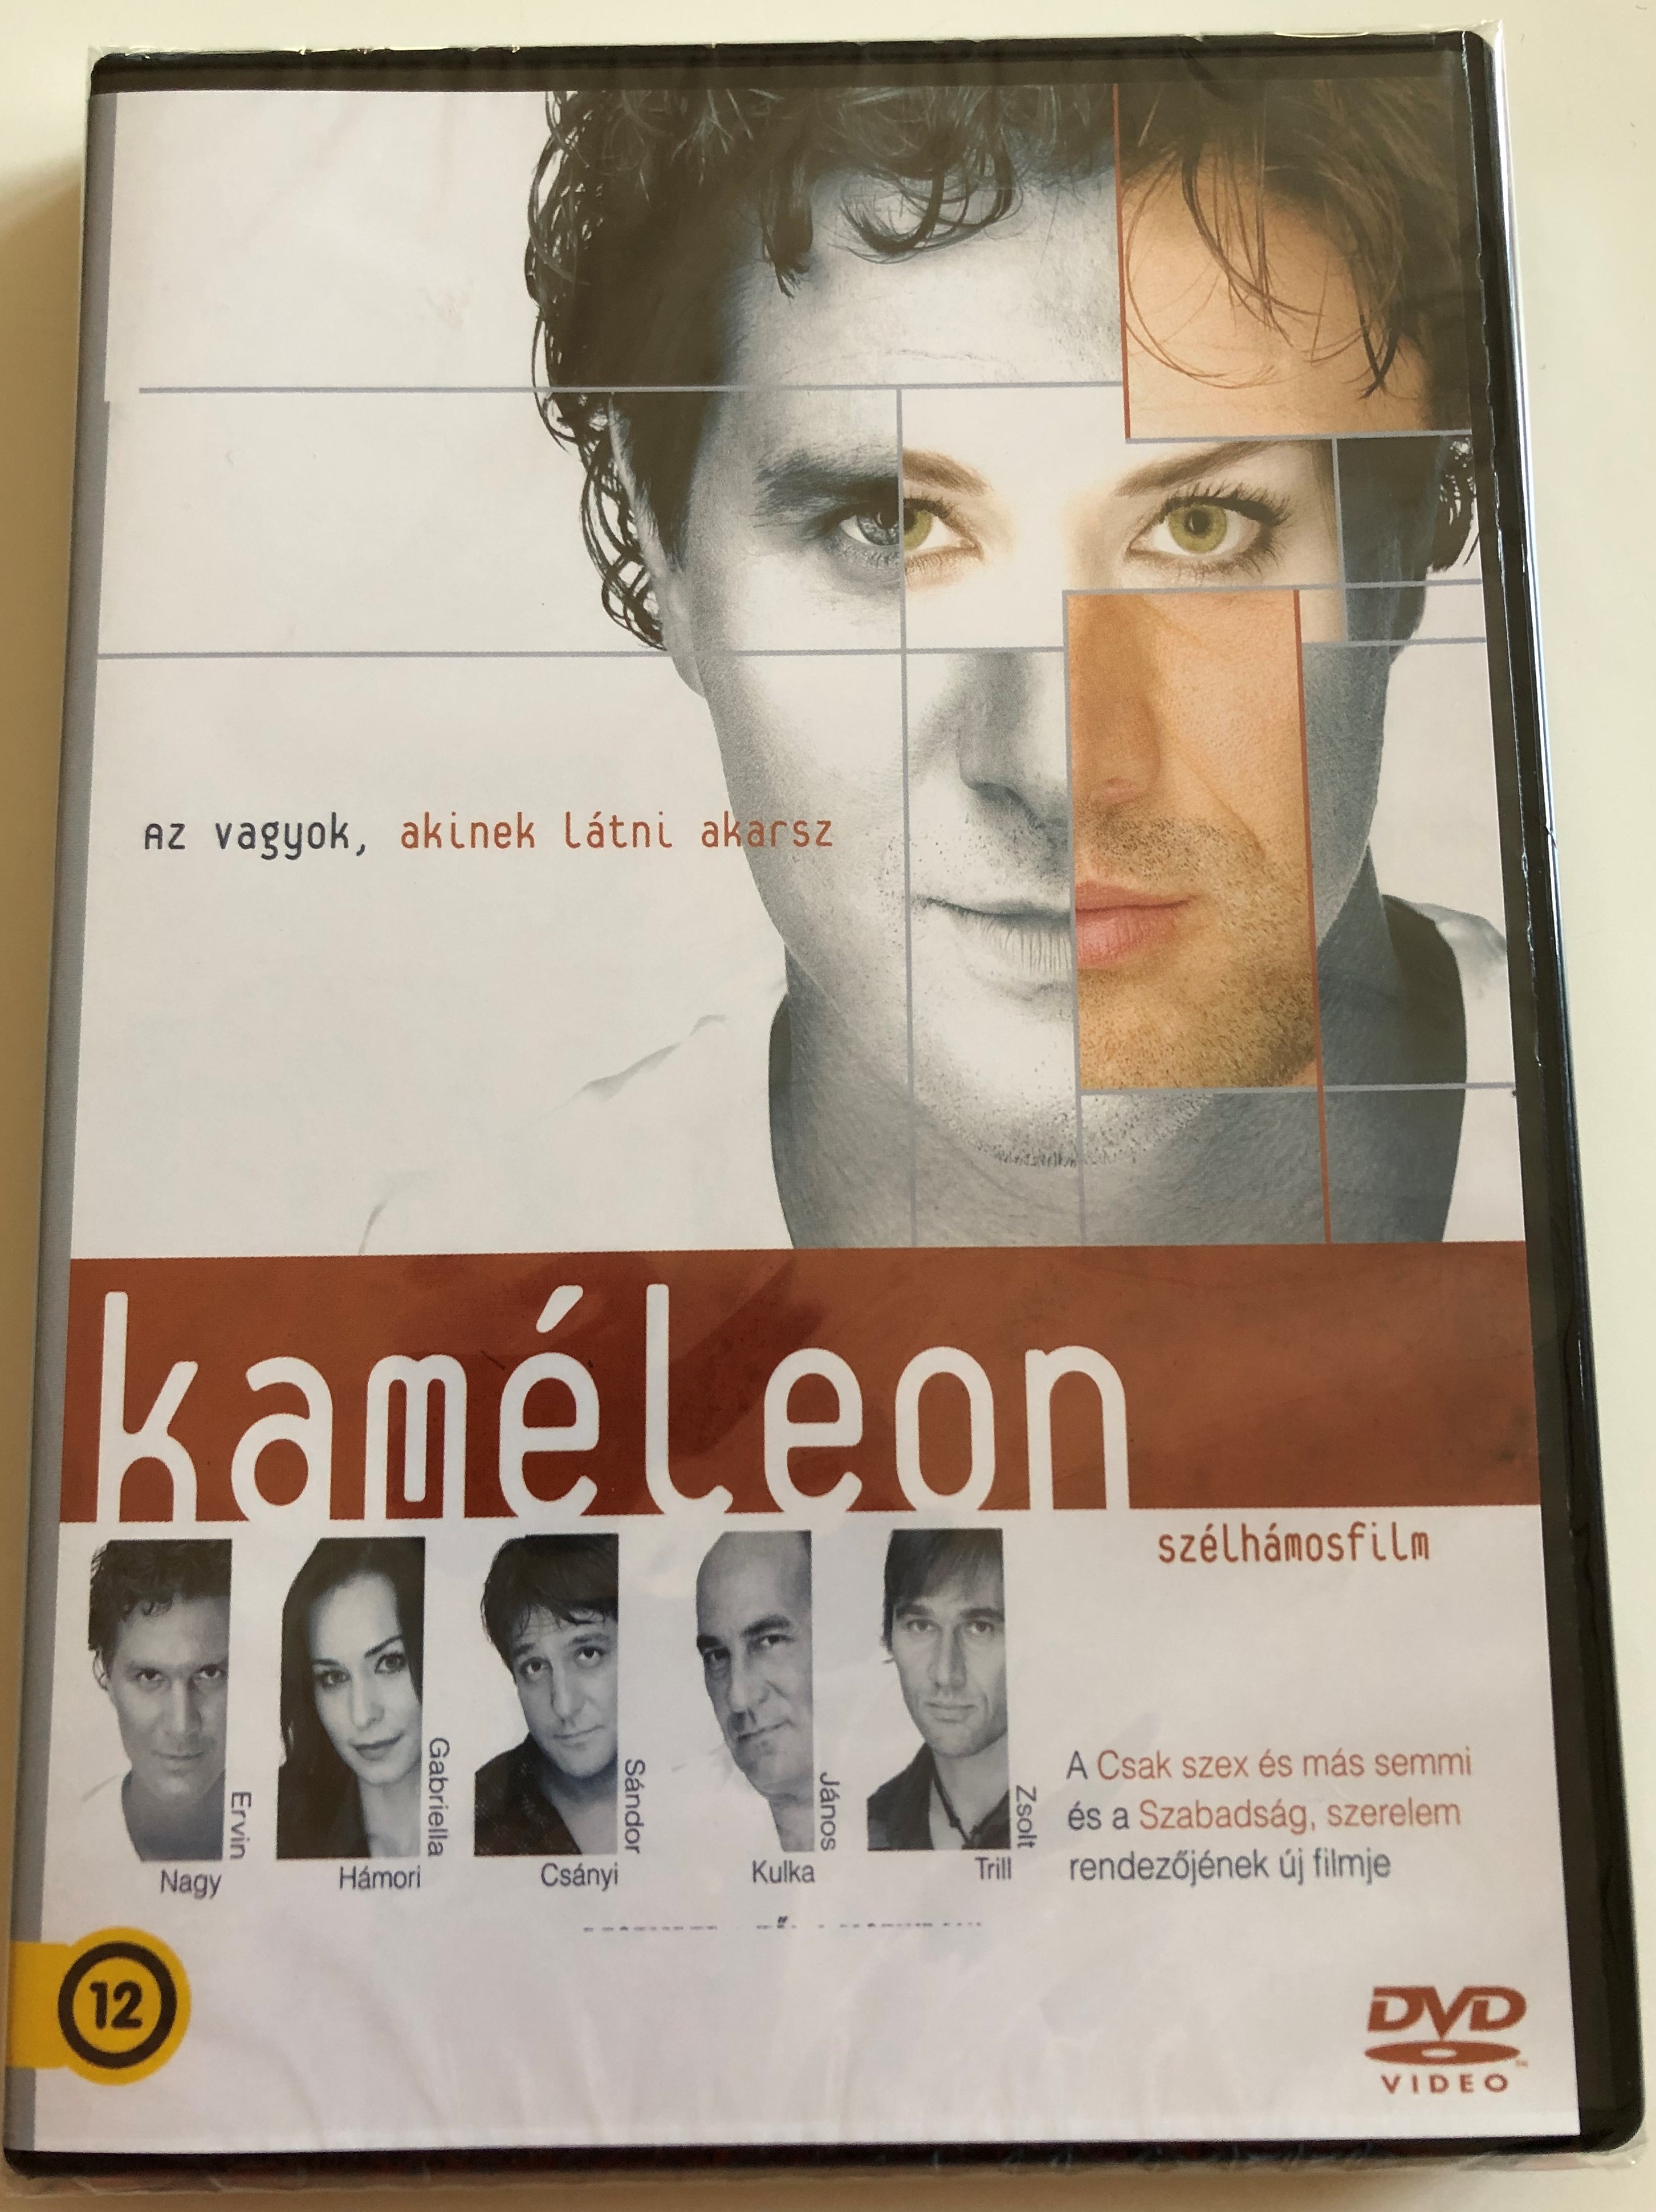 kam-leon-dvd-2008-directed-by-goda-krisztina-starring-nagy-ervin-trill-zsolt-h-mori-gabriella-cs-nyi-s-ndor-kulka-j-nos-l-szl-zsolt-1-.jpg